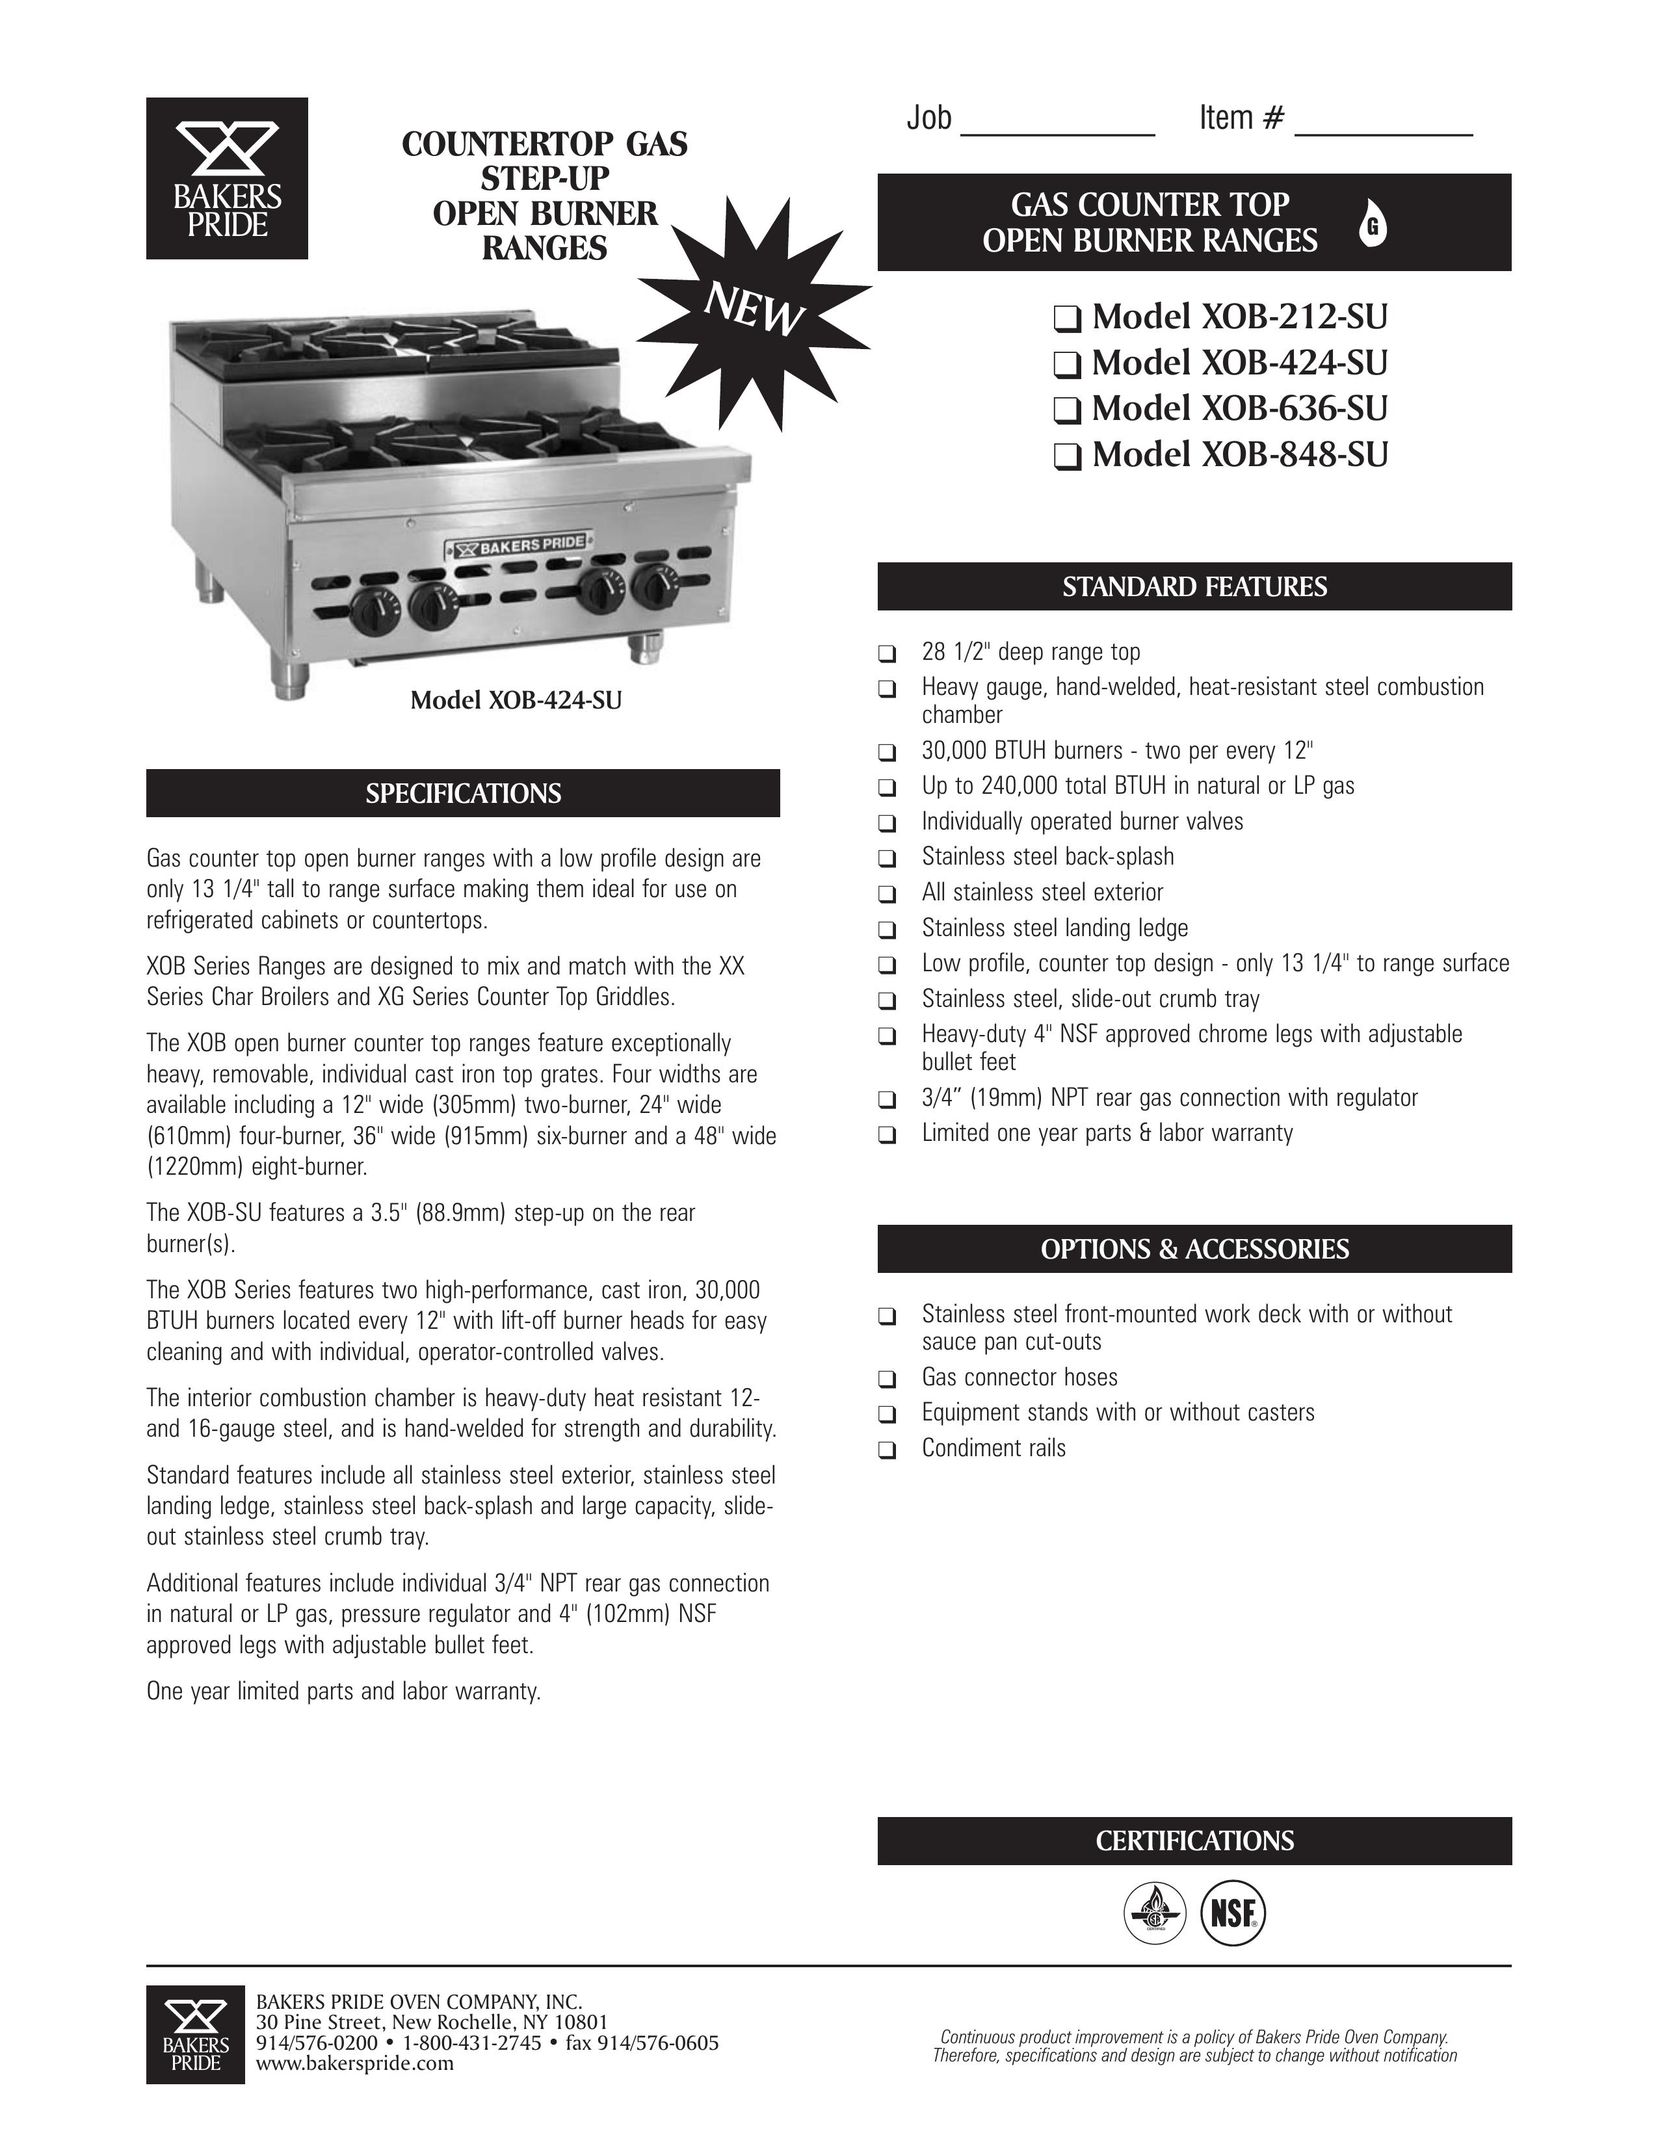 Bakers Pride Oven XOB-636-SU Range User Manual